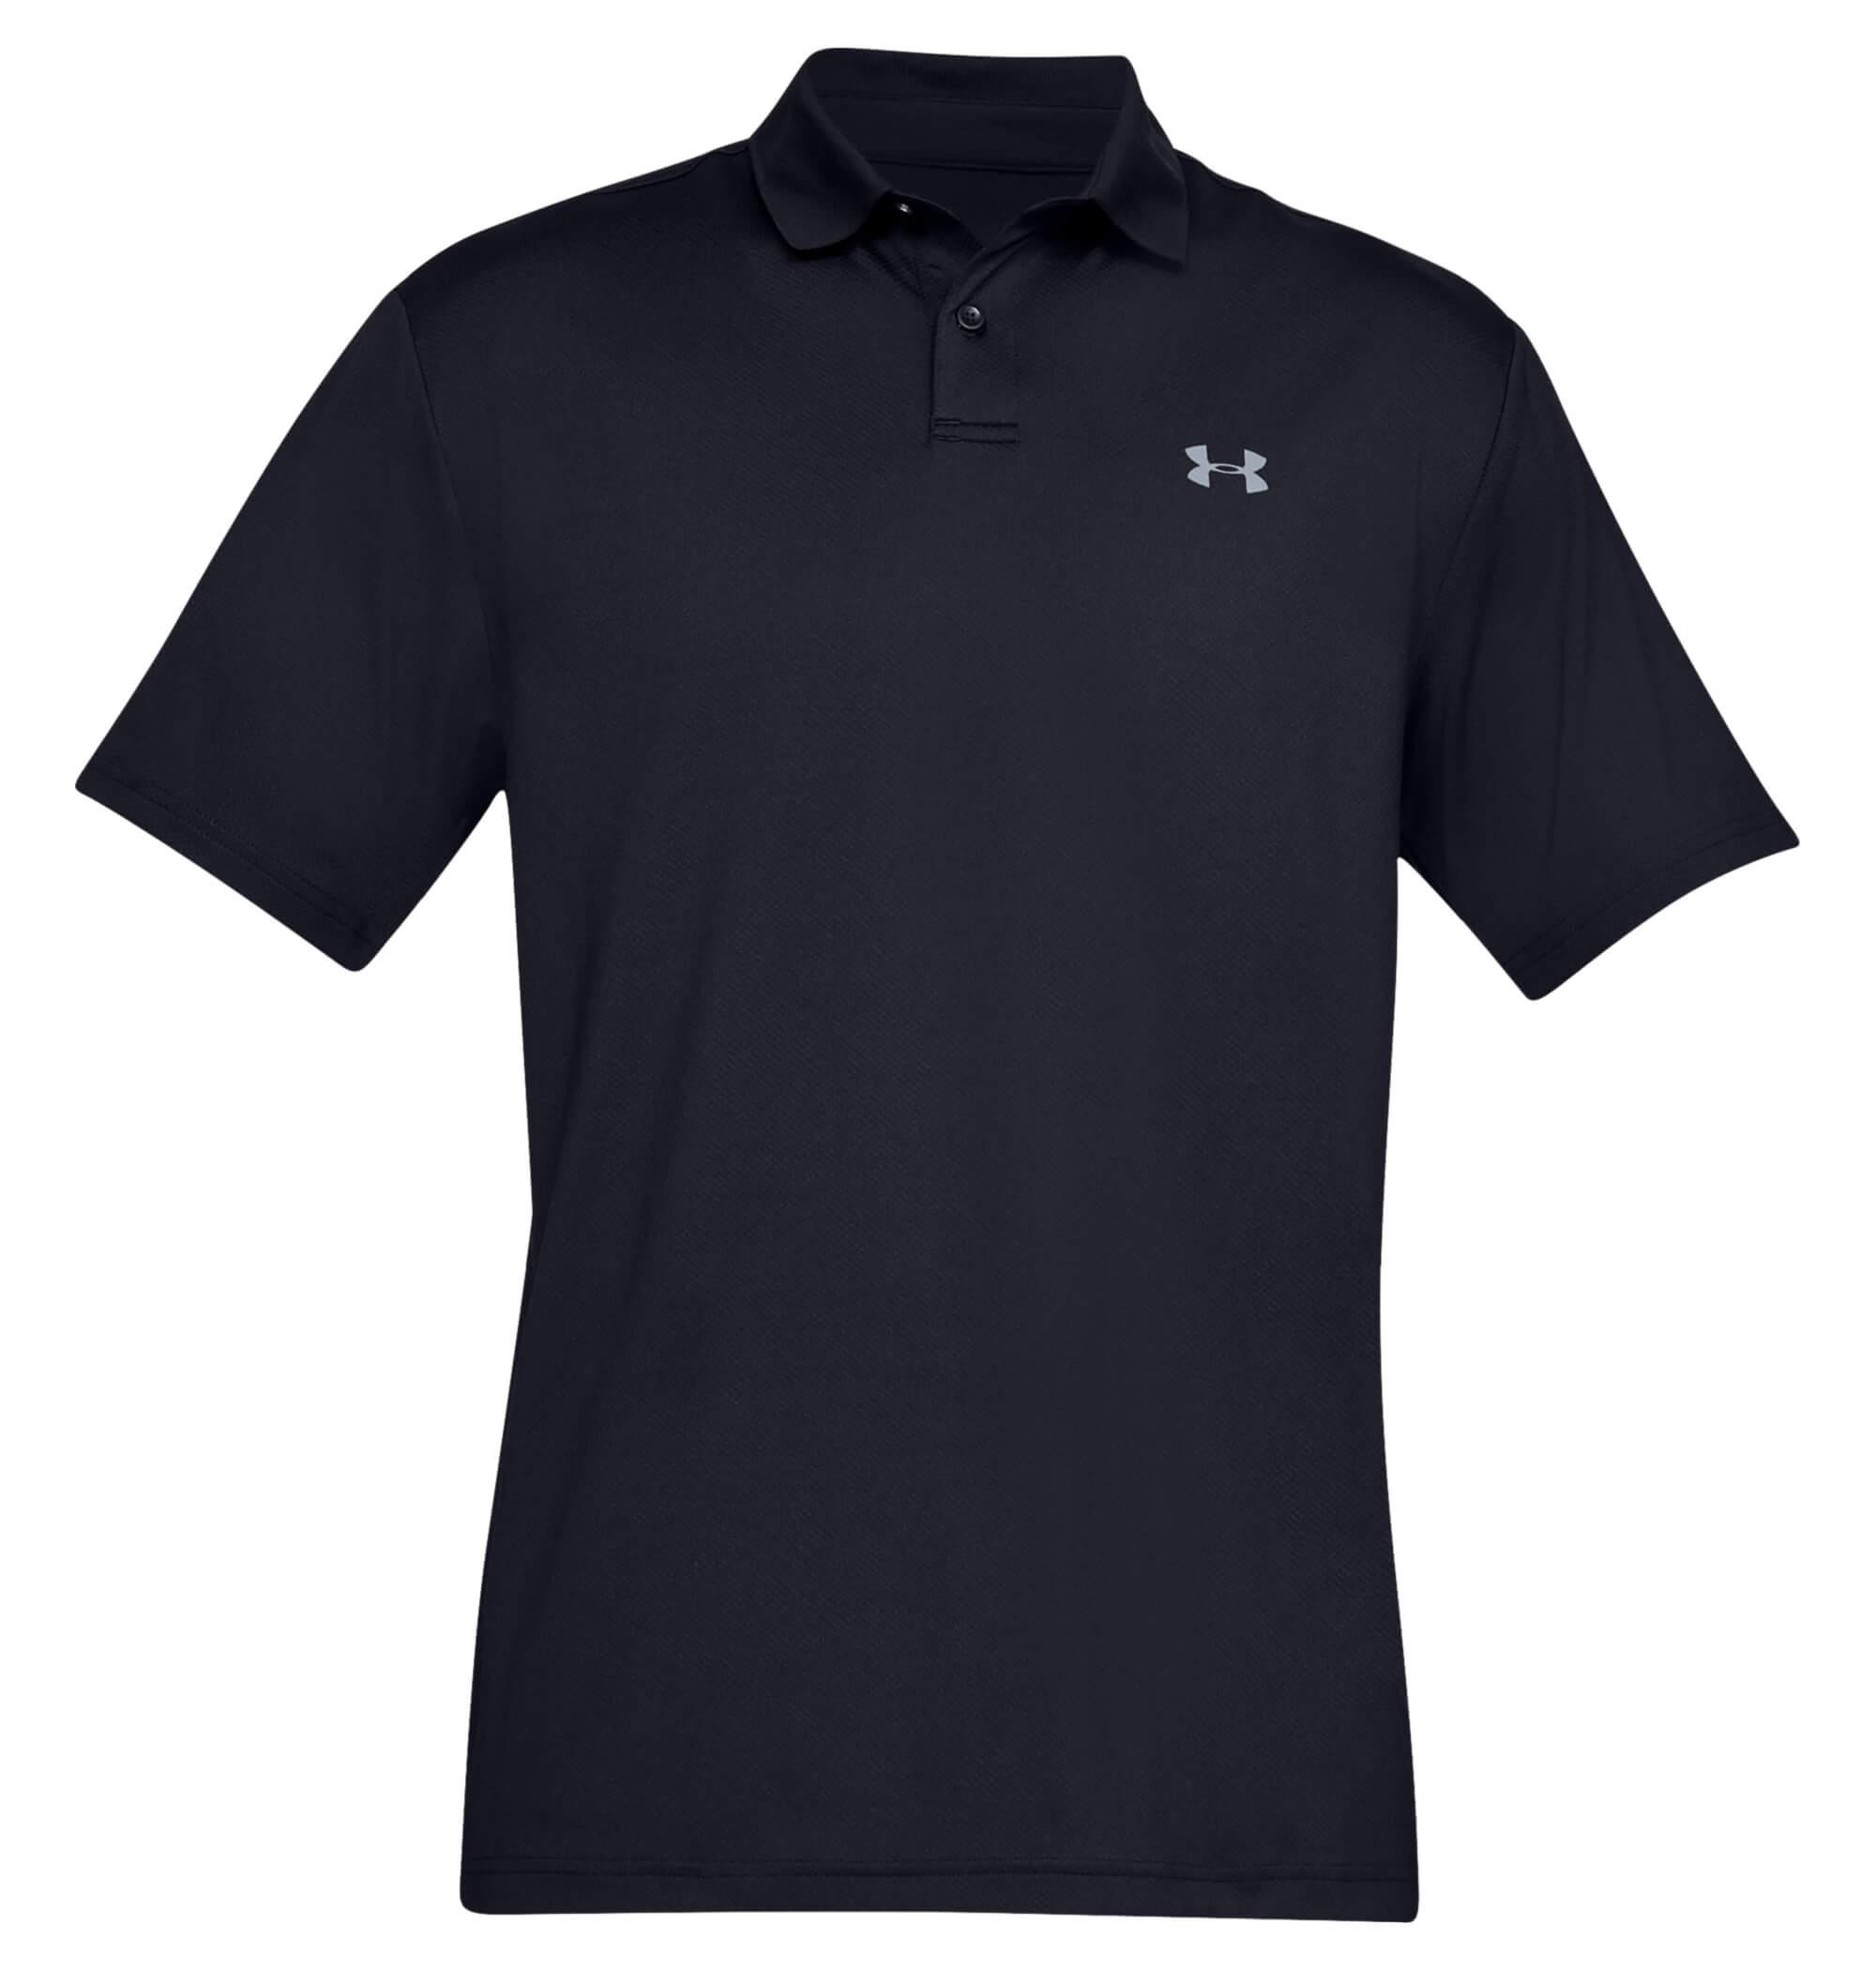 black under armour golf shirt